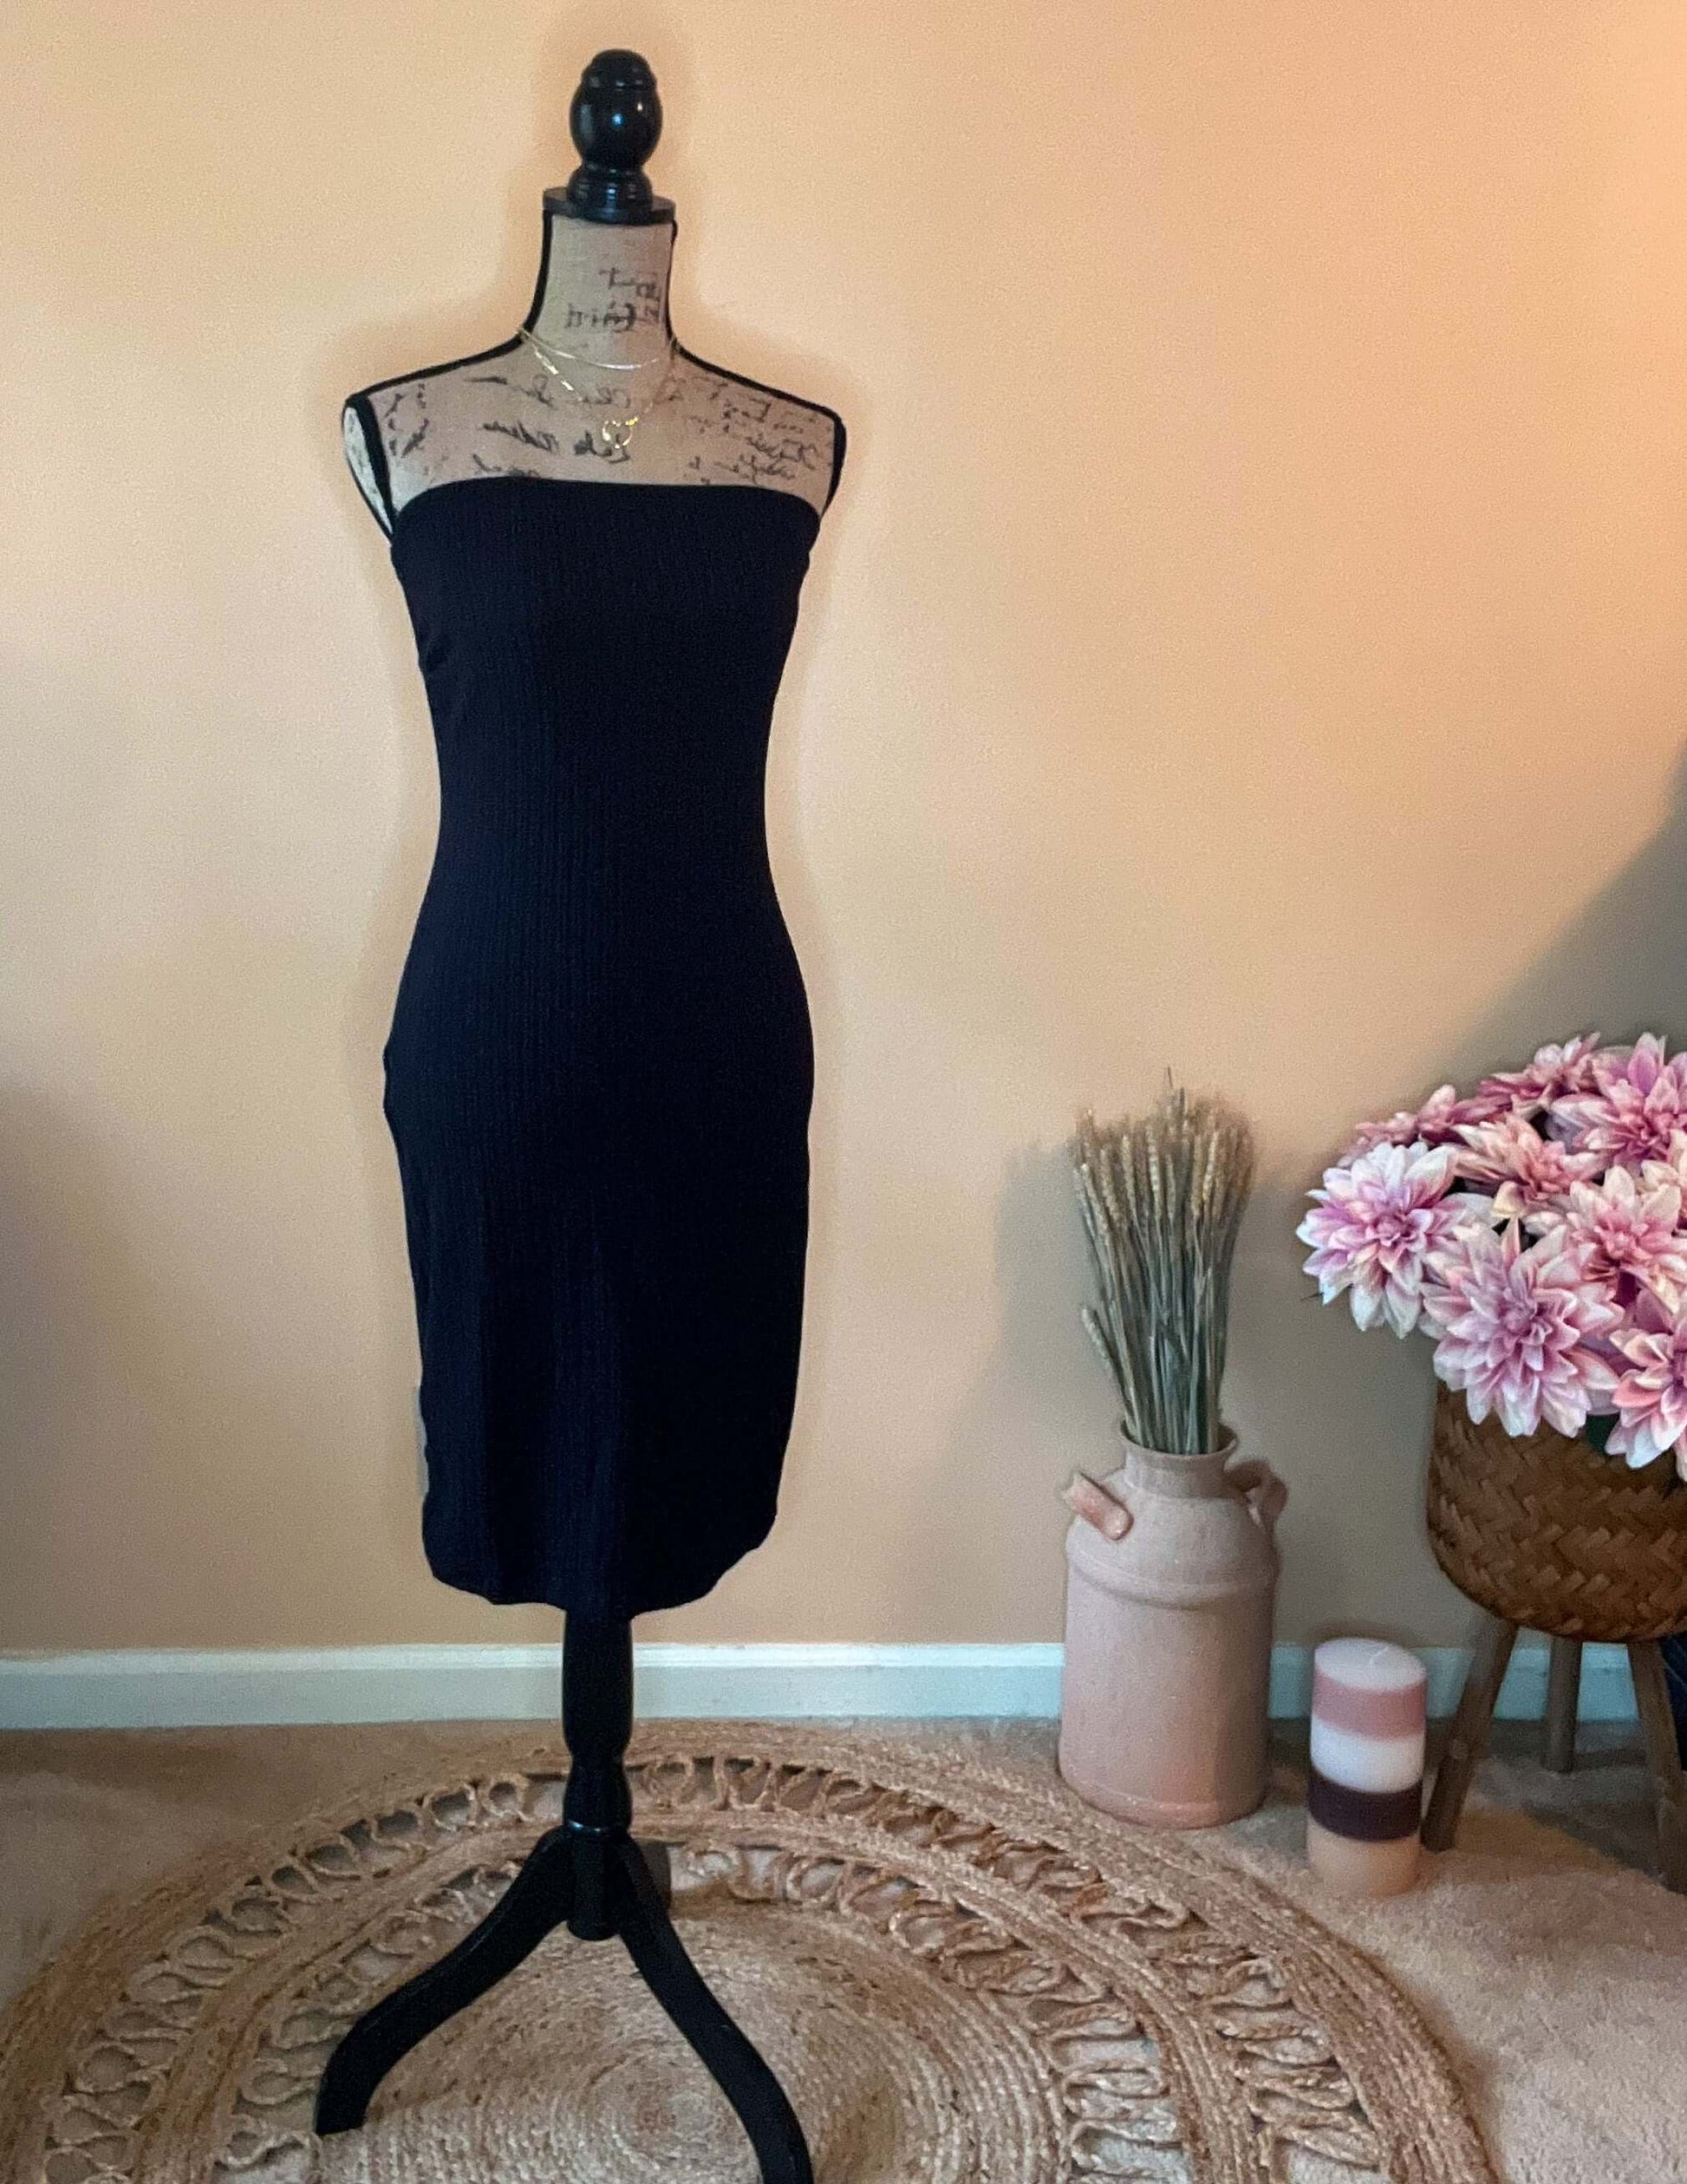 Dresses body contour dress, clothing, LBD, little black dress, tube dress Size: Small, Medium, Large, XL